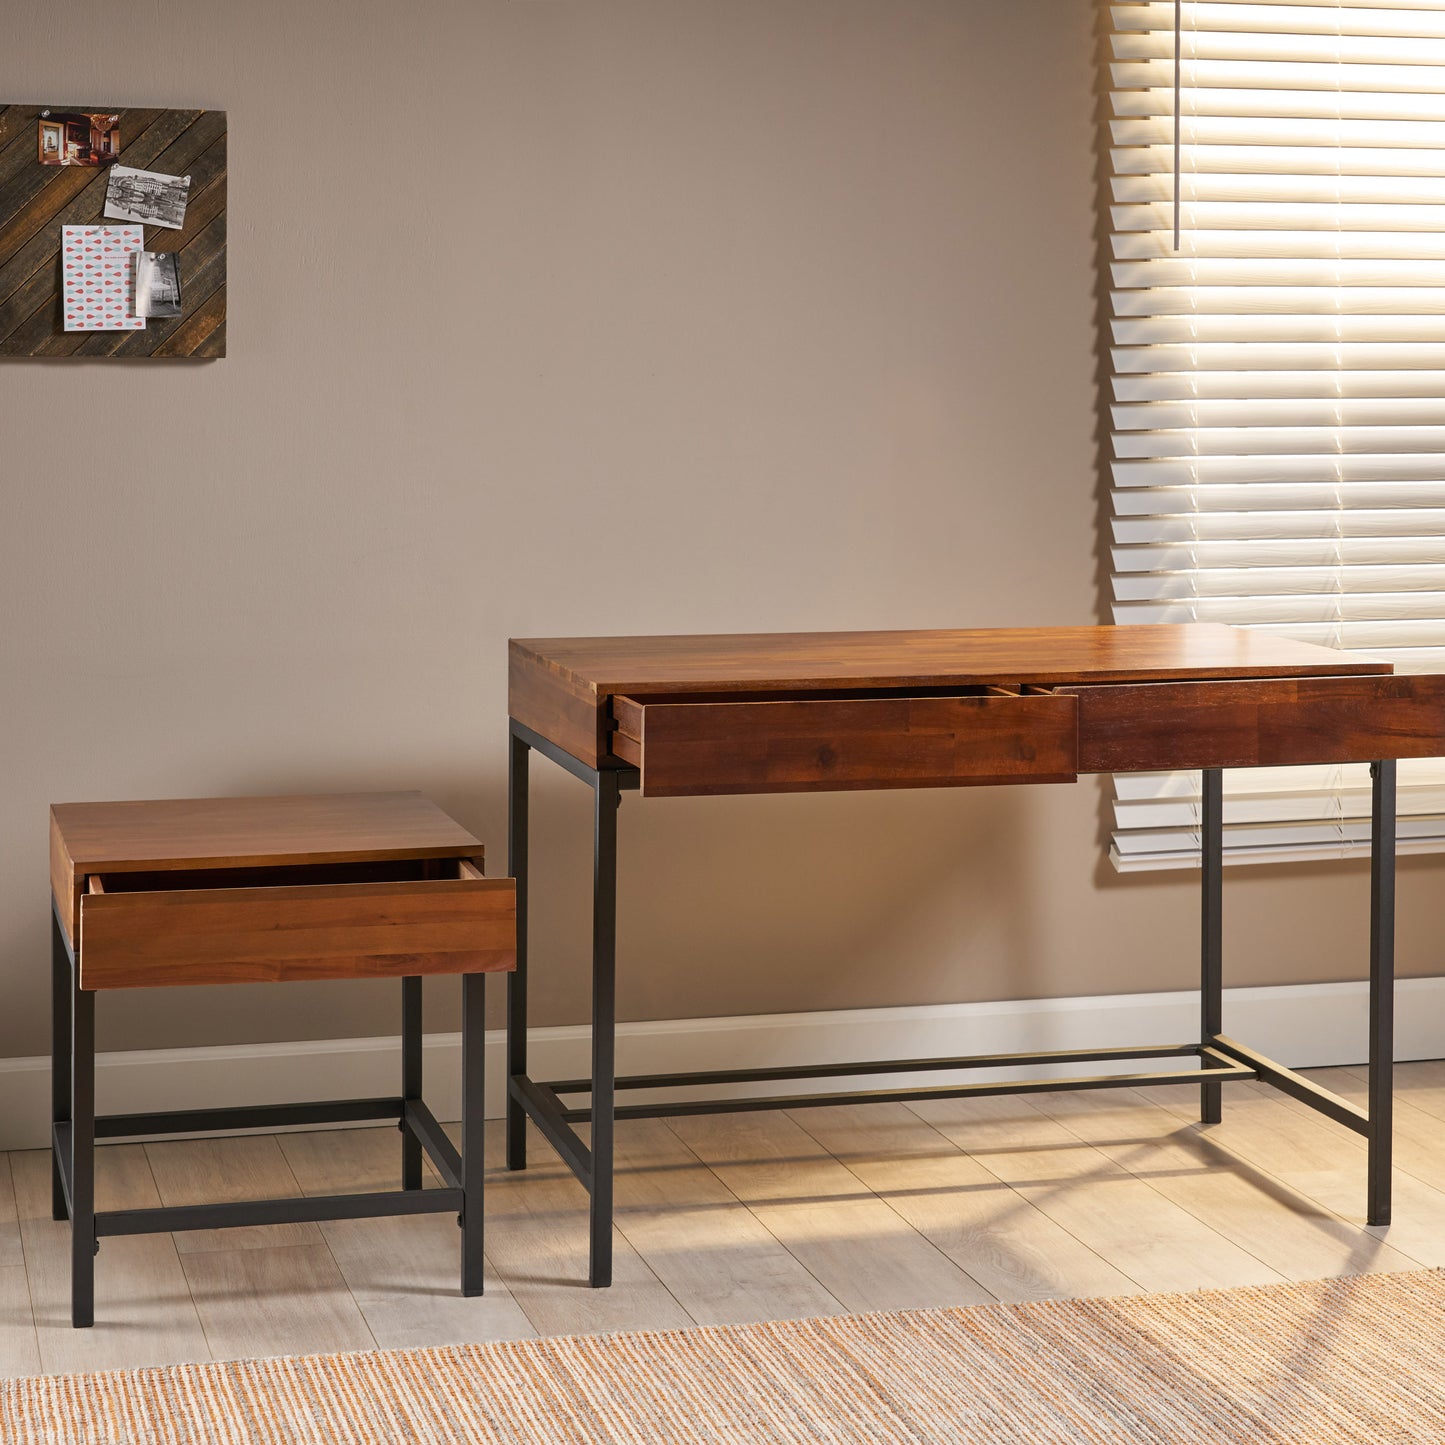 Elrod Industrial Dark Oak Acacia Wood Storage Side Table and Desk Set